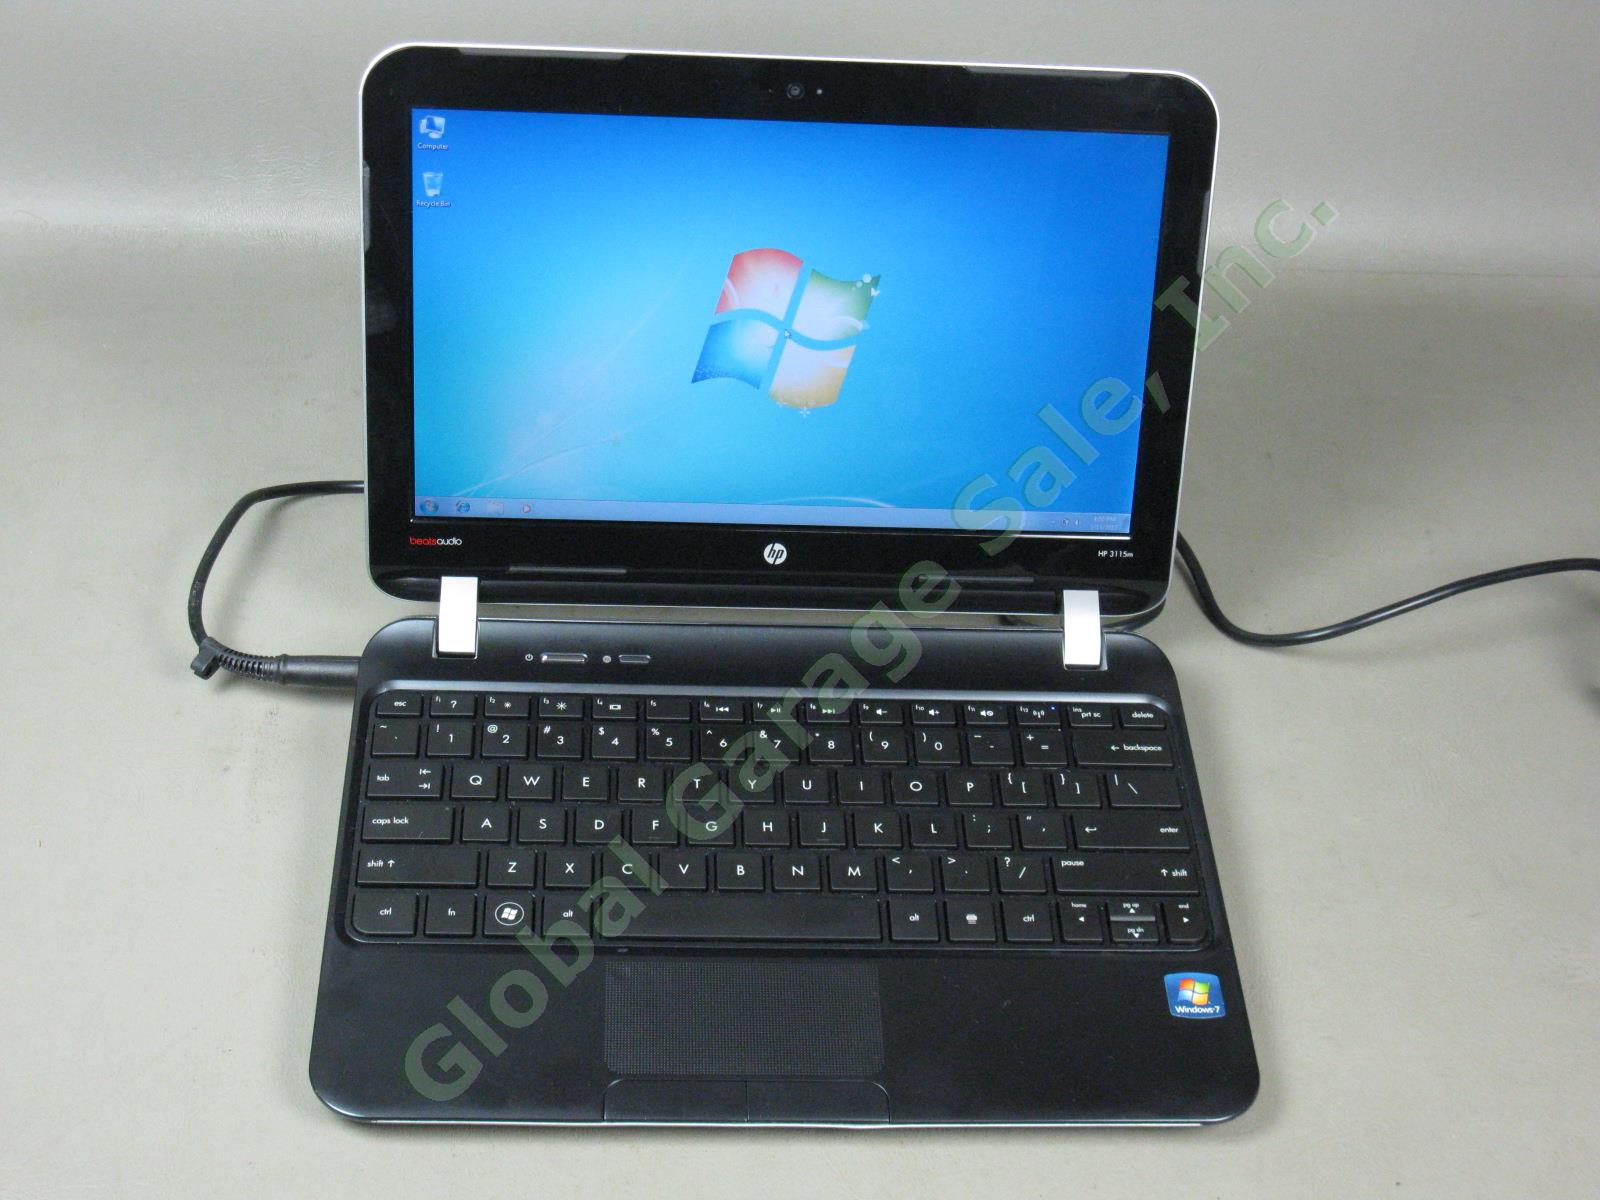 HP 3115m 11.6" Notebook Laptop Computer AMD 1.65GHz 4GB 320GB Windows 7 Ultim NR